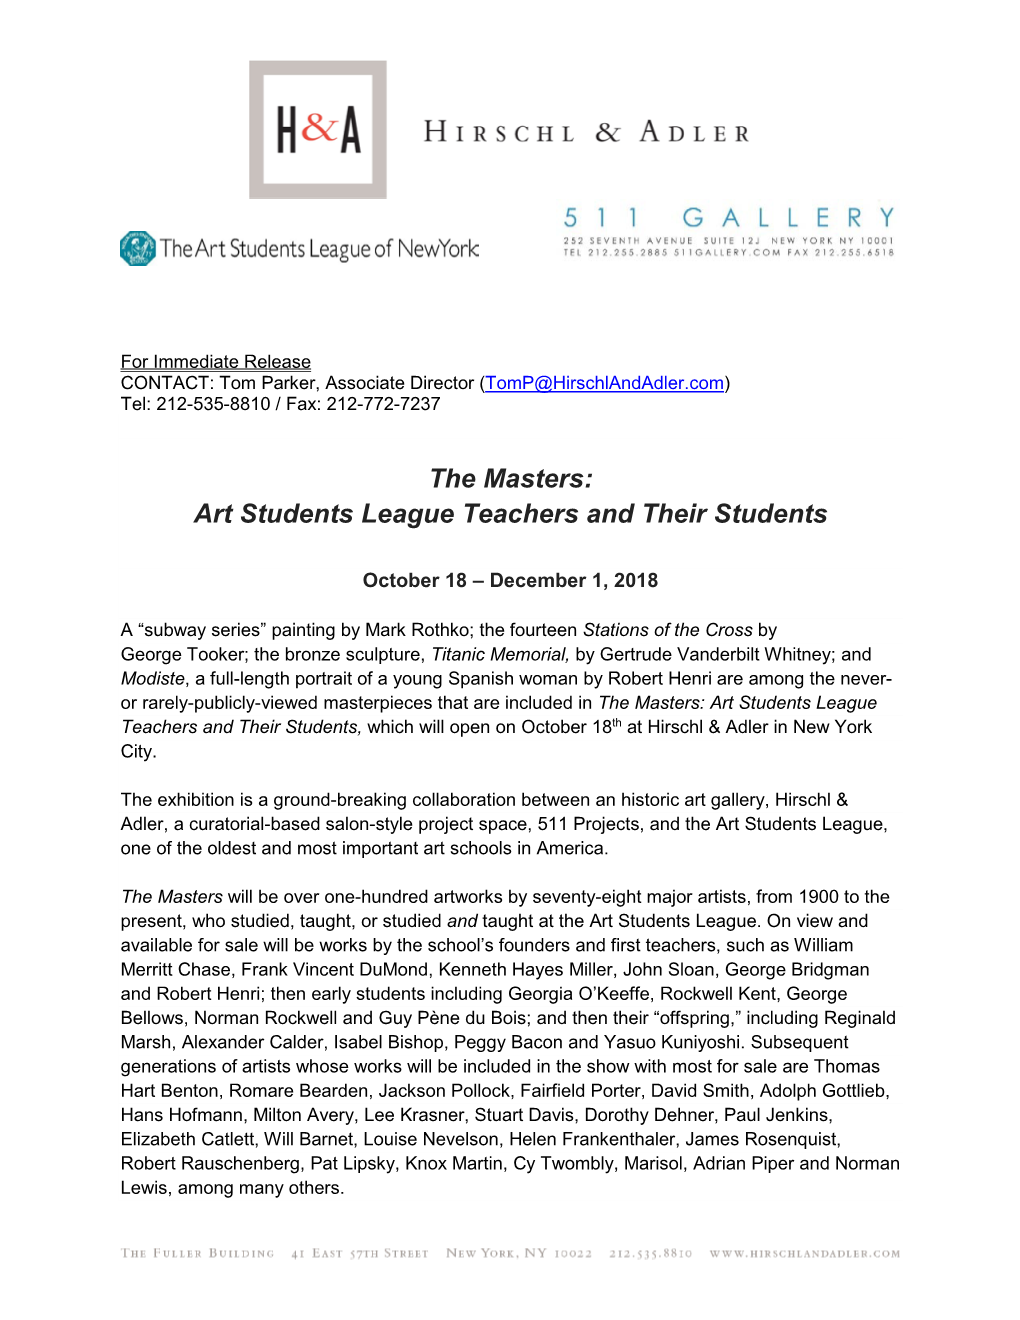 Art Students League Teachers and Their Students